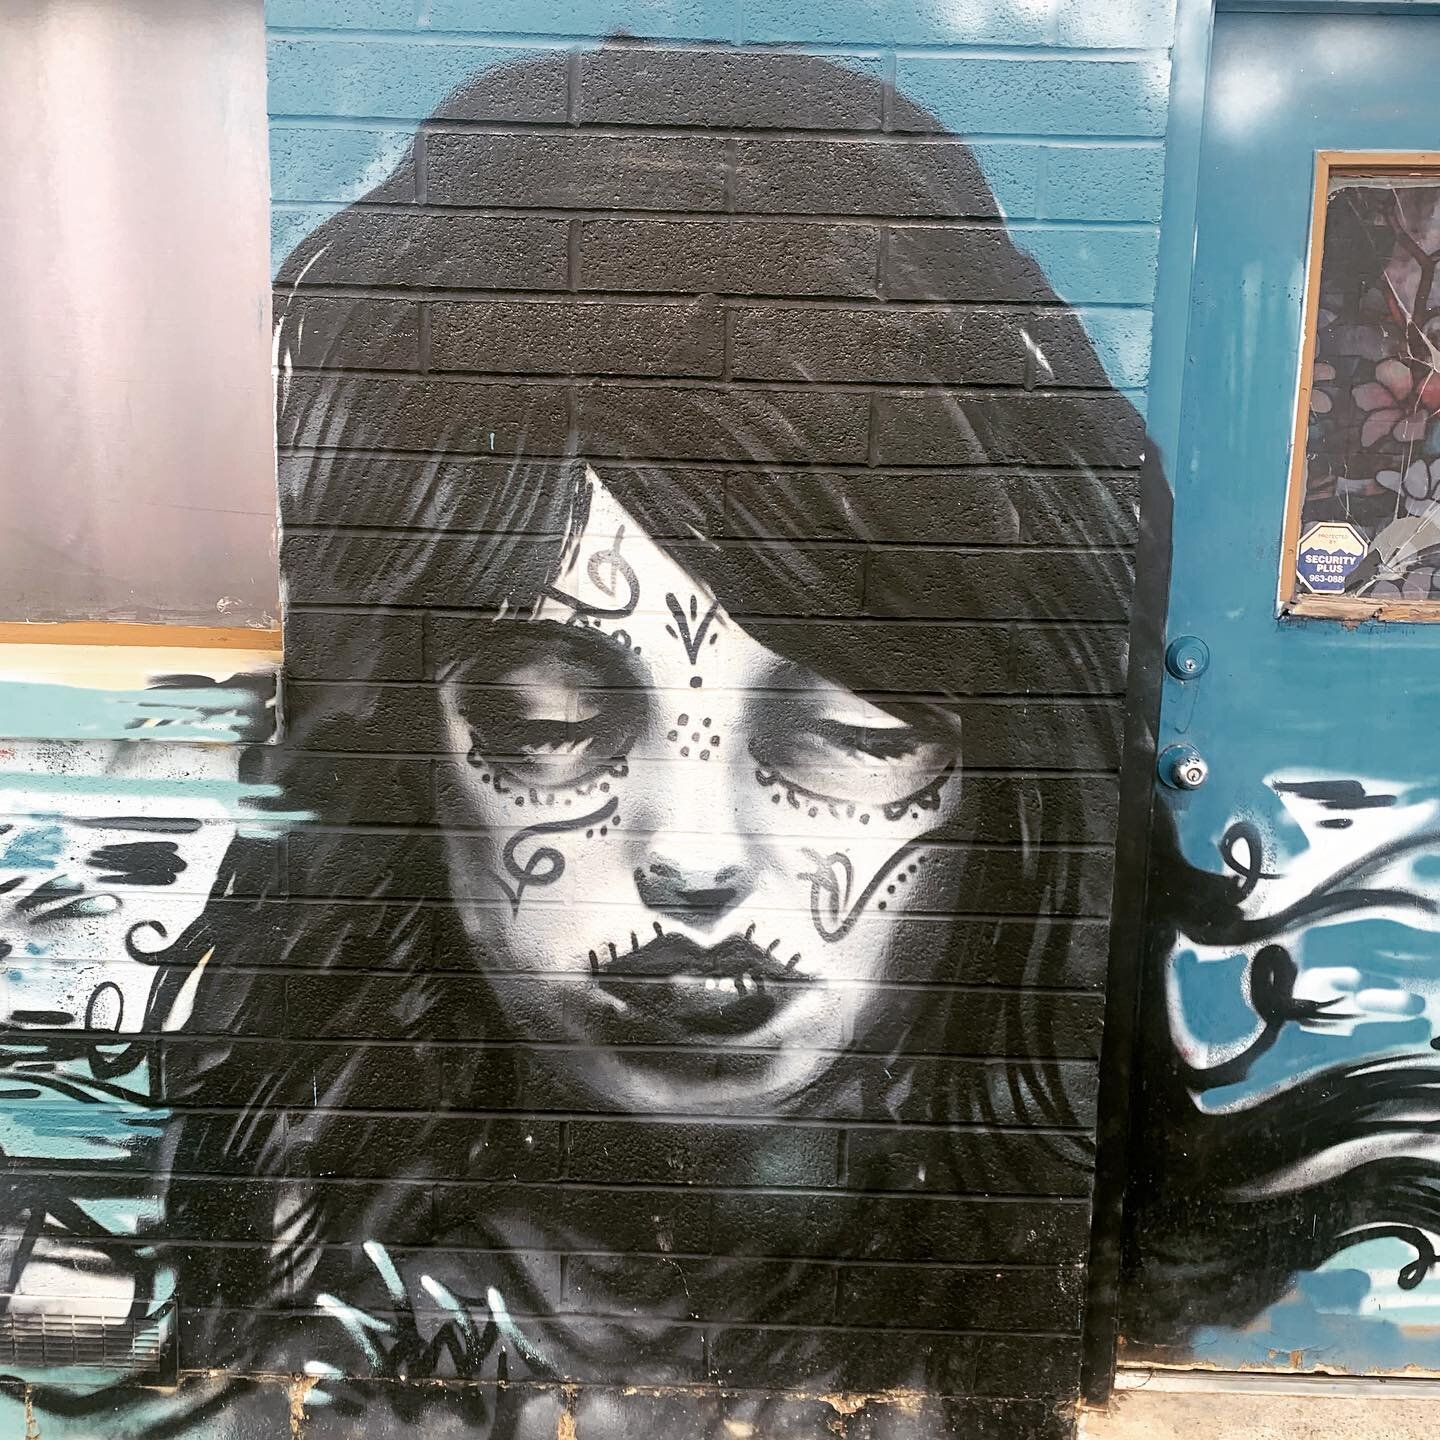 Check out this awesome street art! 🎨 

#horrorart #horrorfan #horror #horrorbooks #writersofinstagram #writerscommunity #utah #saltlakecity #horrormovie